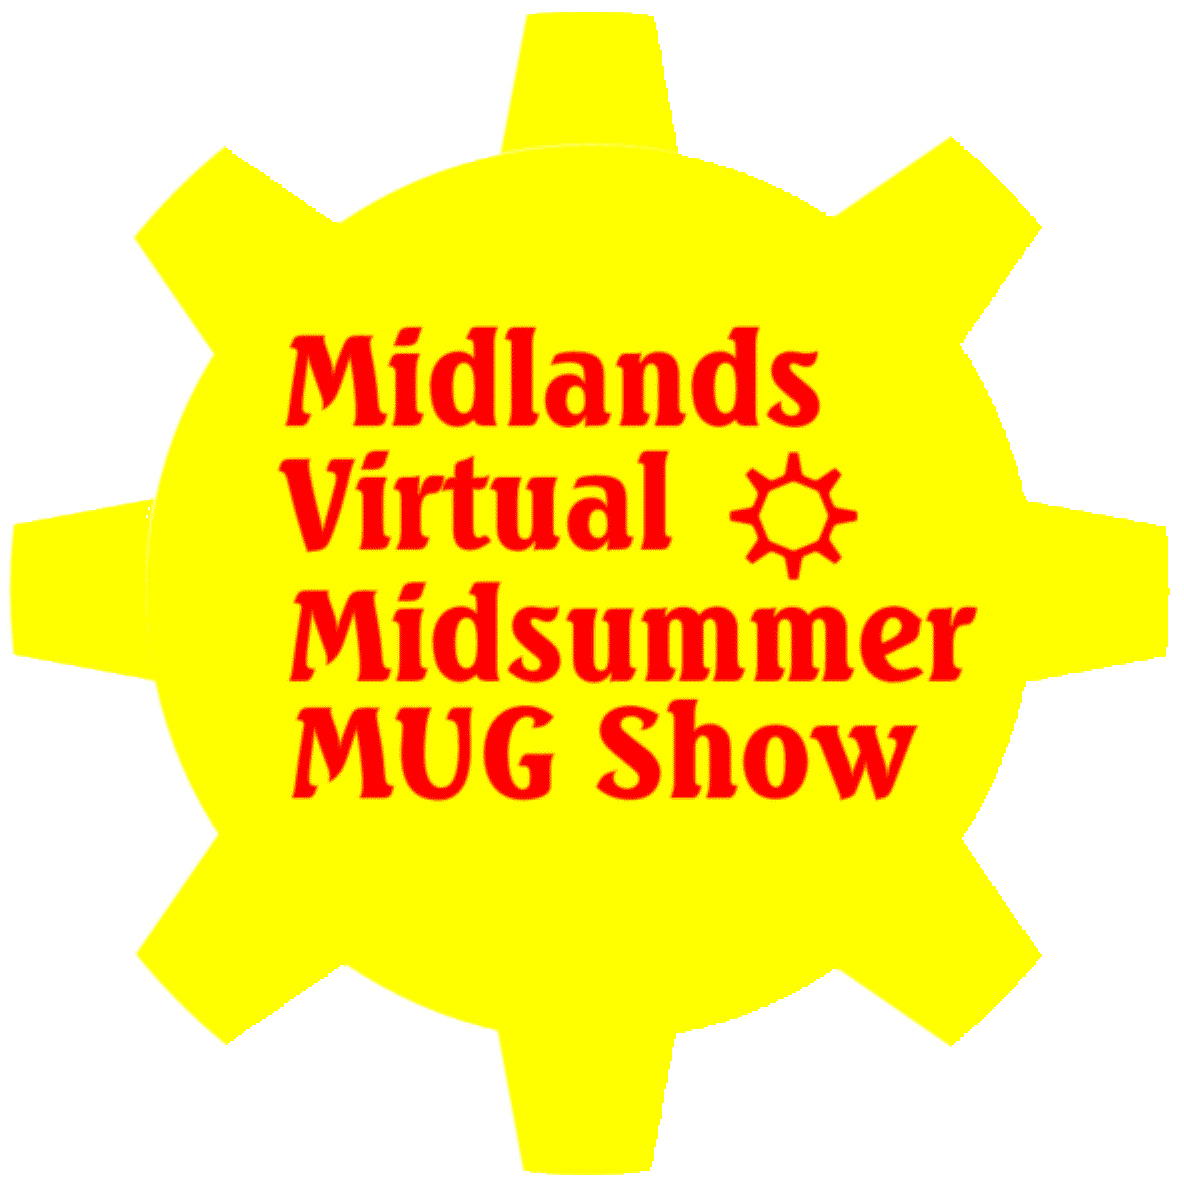 Midlands Virtual Midsummer Mug Show